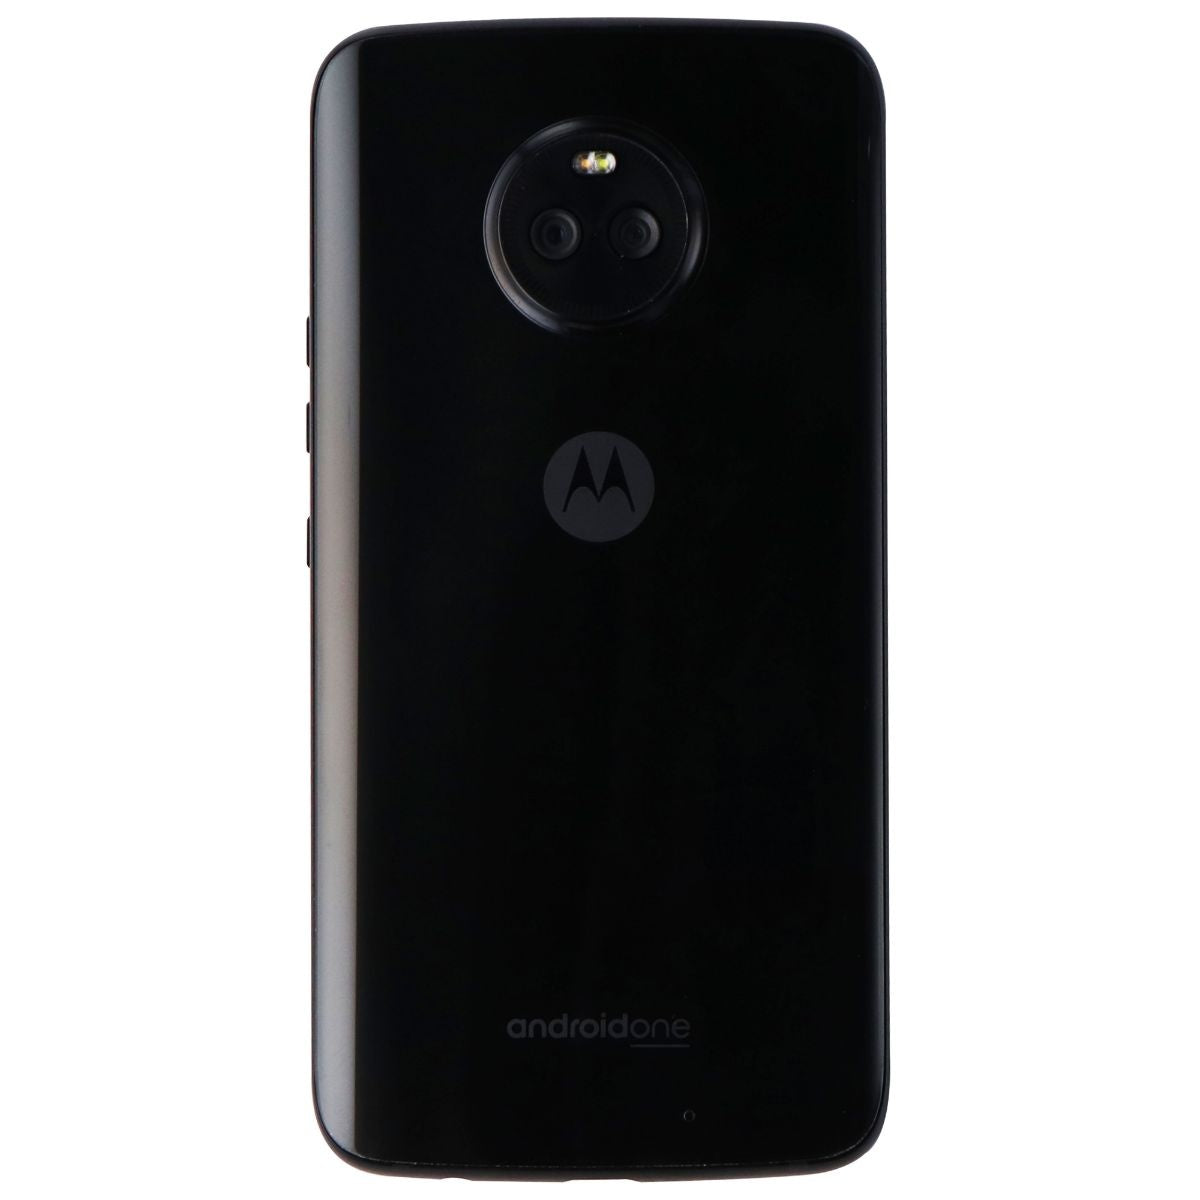 Motorola Moto X4 (XT1900-1) AndroidOne Smartphone (Verizon Locked) - 32GB/Black Cell Phones & Smartphones Motorola    - Simple Cell Bulk Wholesale Pricing - USA Seller